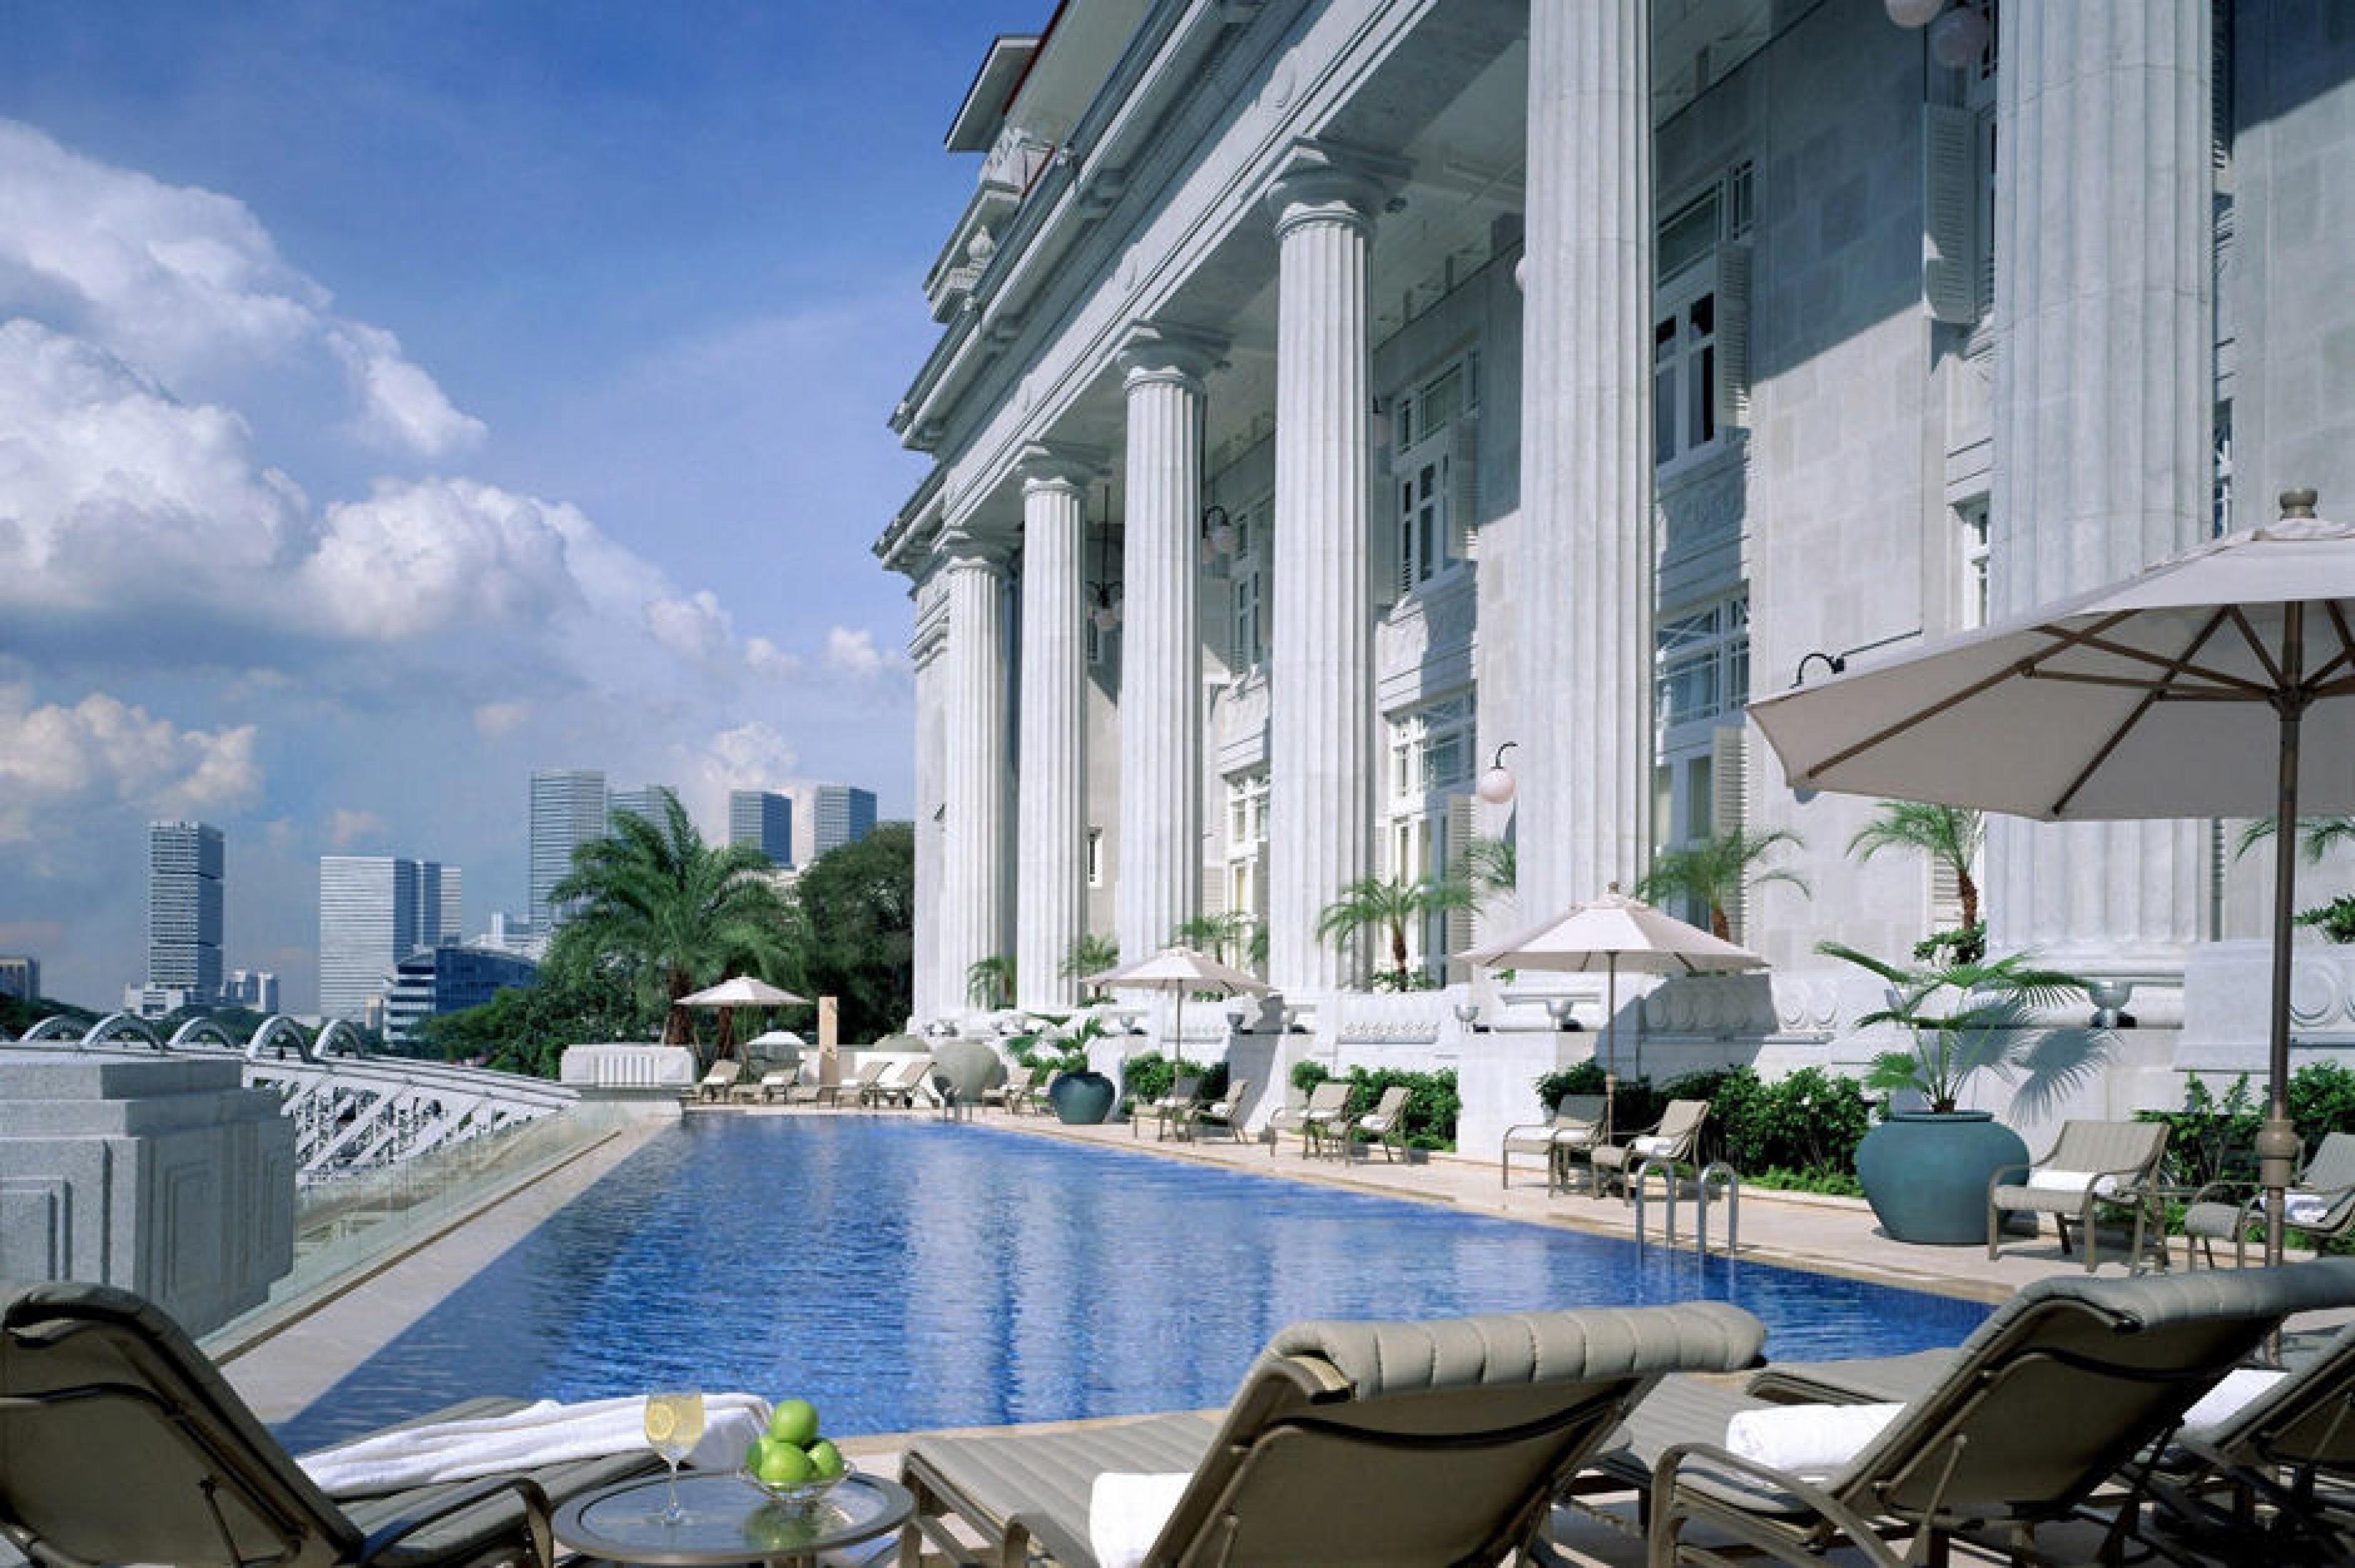 Pool Lounge at The Fullerton Hotel, Singapore